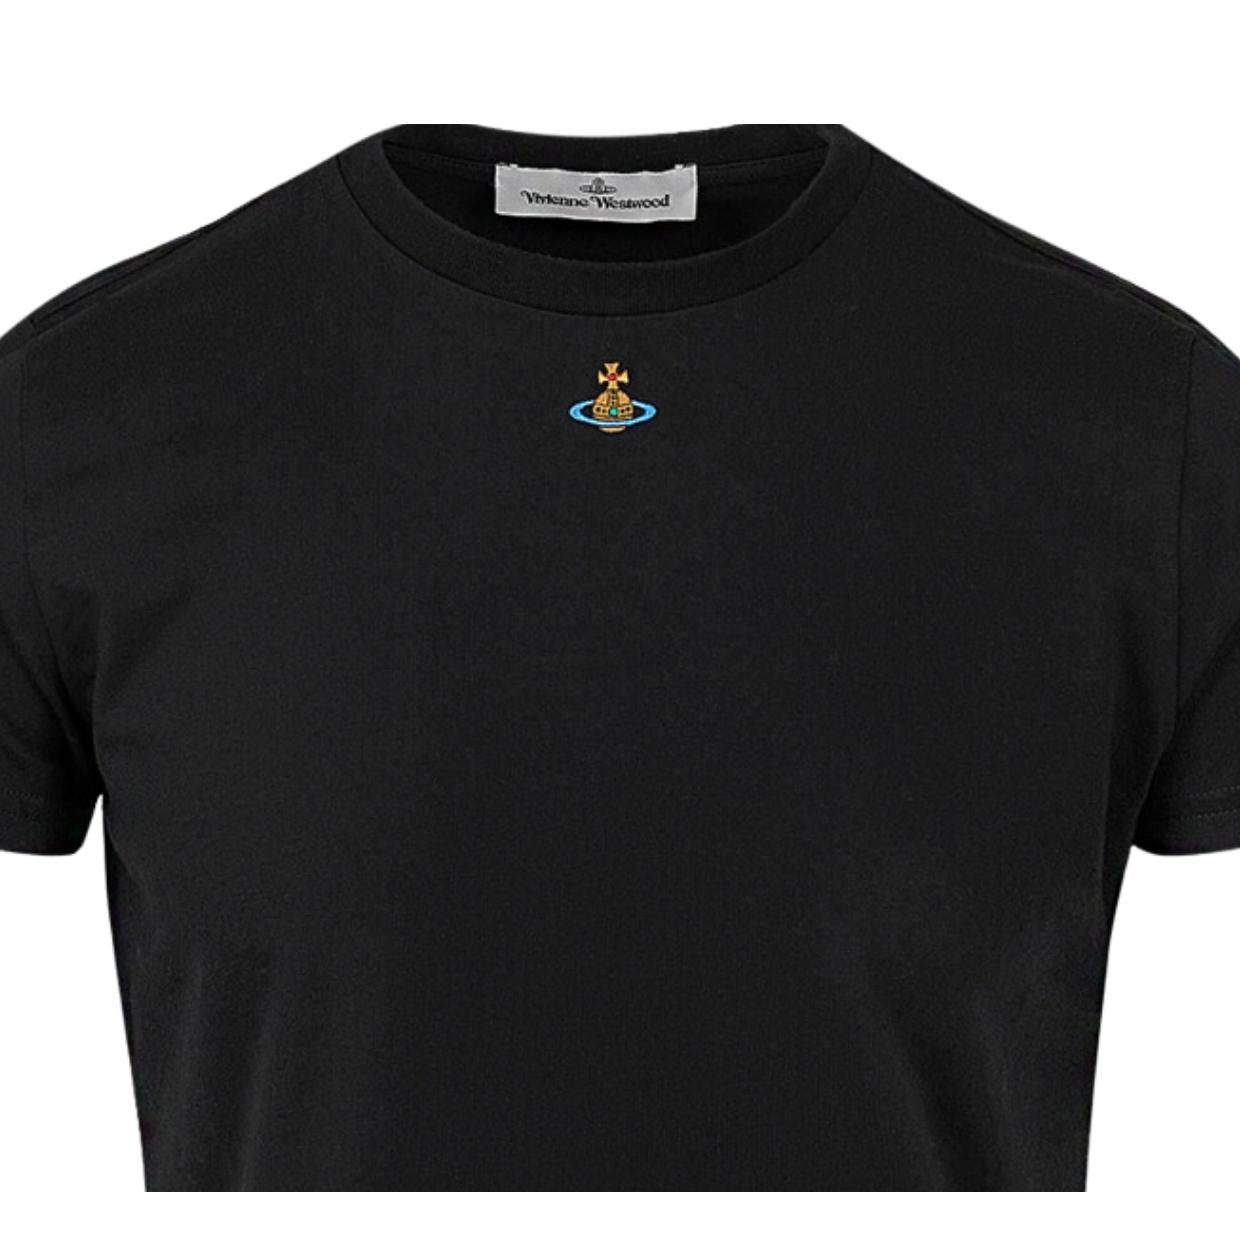 Vivienne Westwood Orb Peru Black T-Shirt